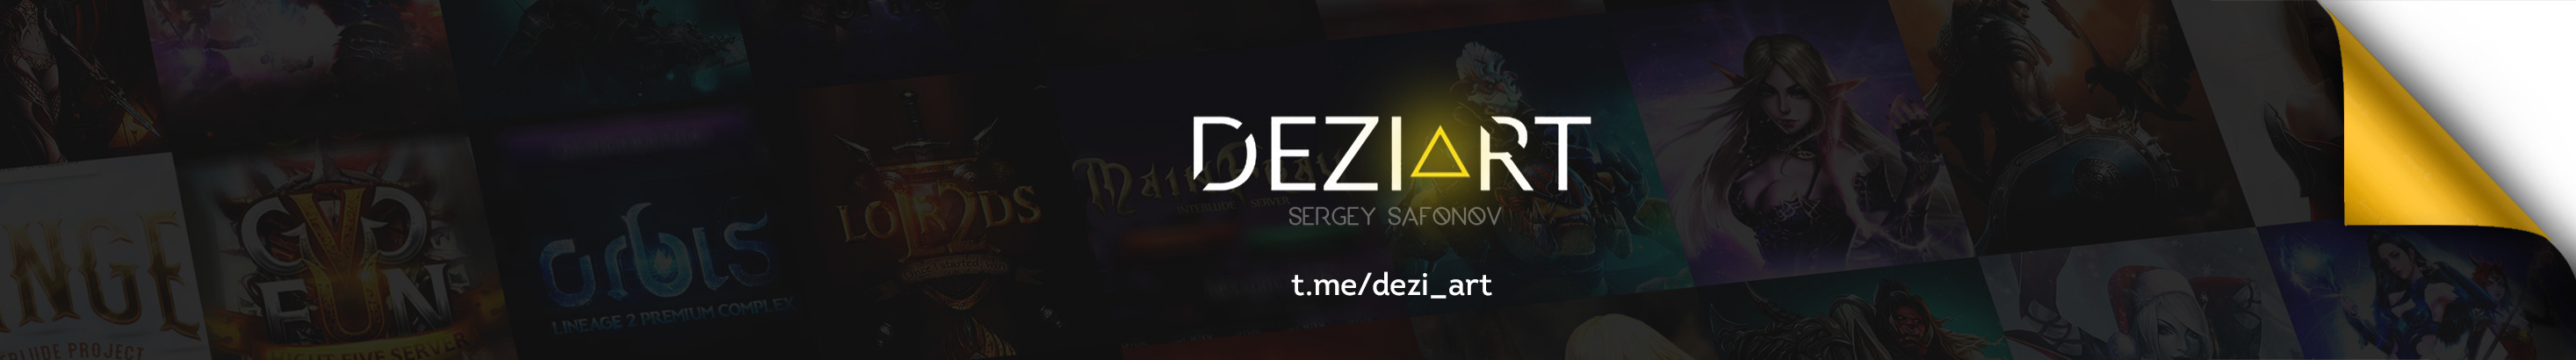 Banner de perfil de Sergei Safonov